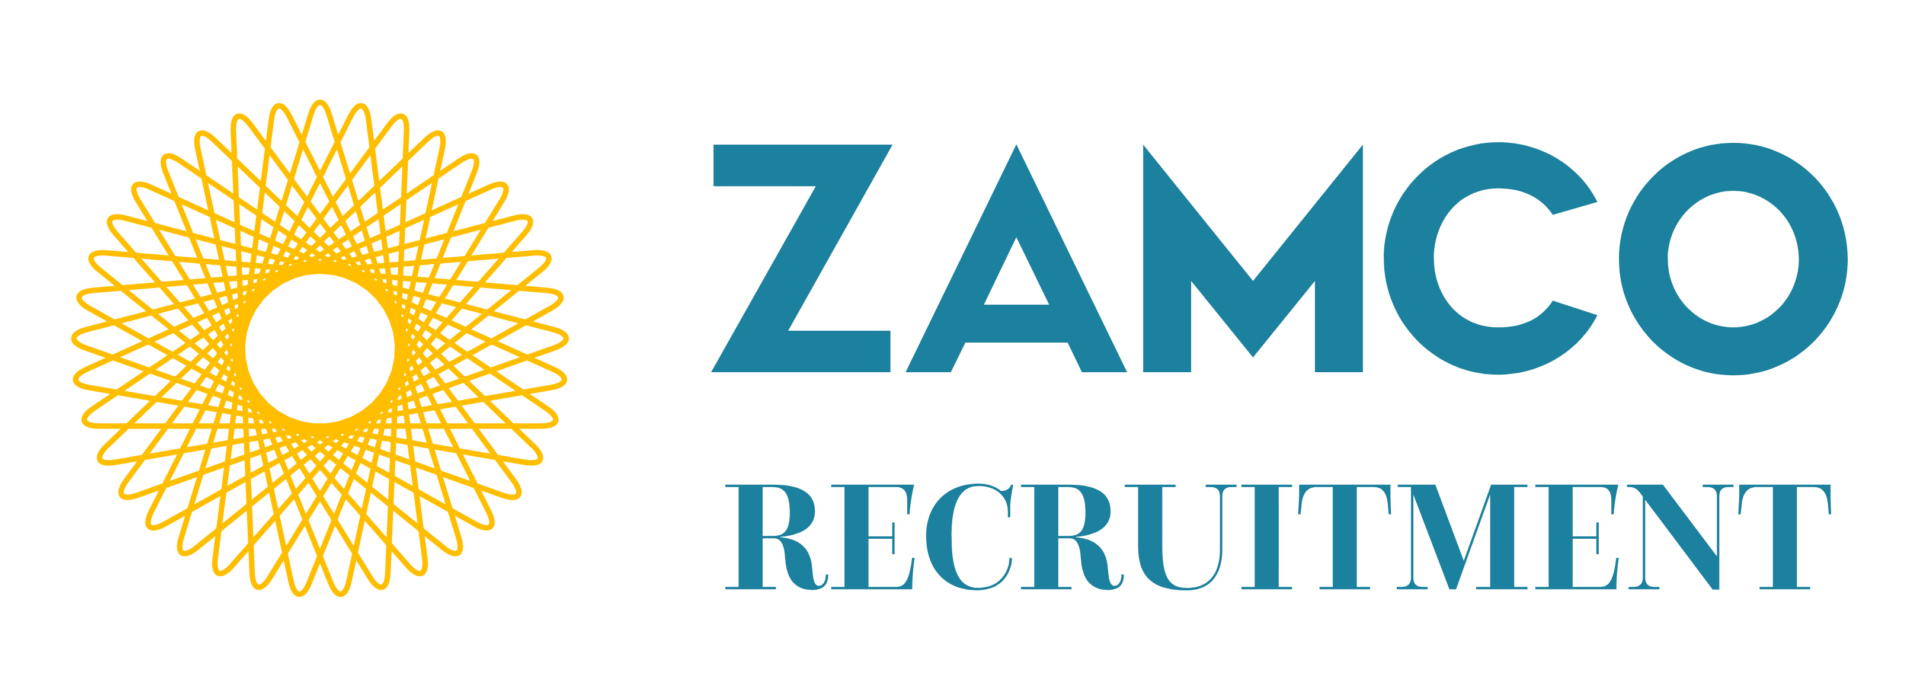 Zamco Recruitment